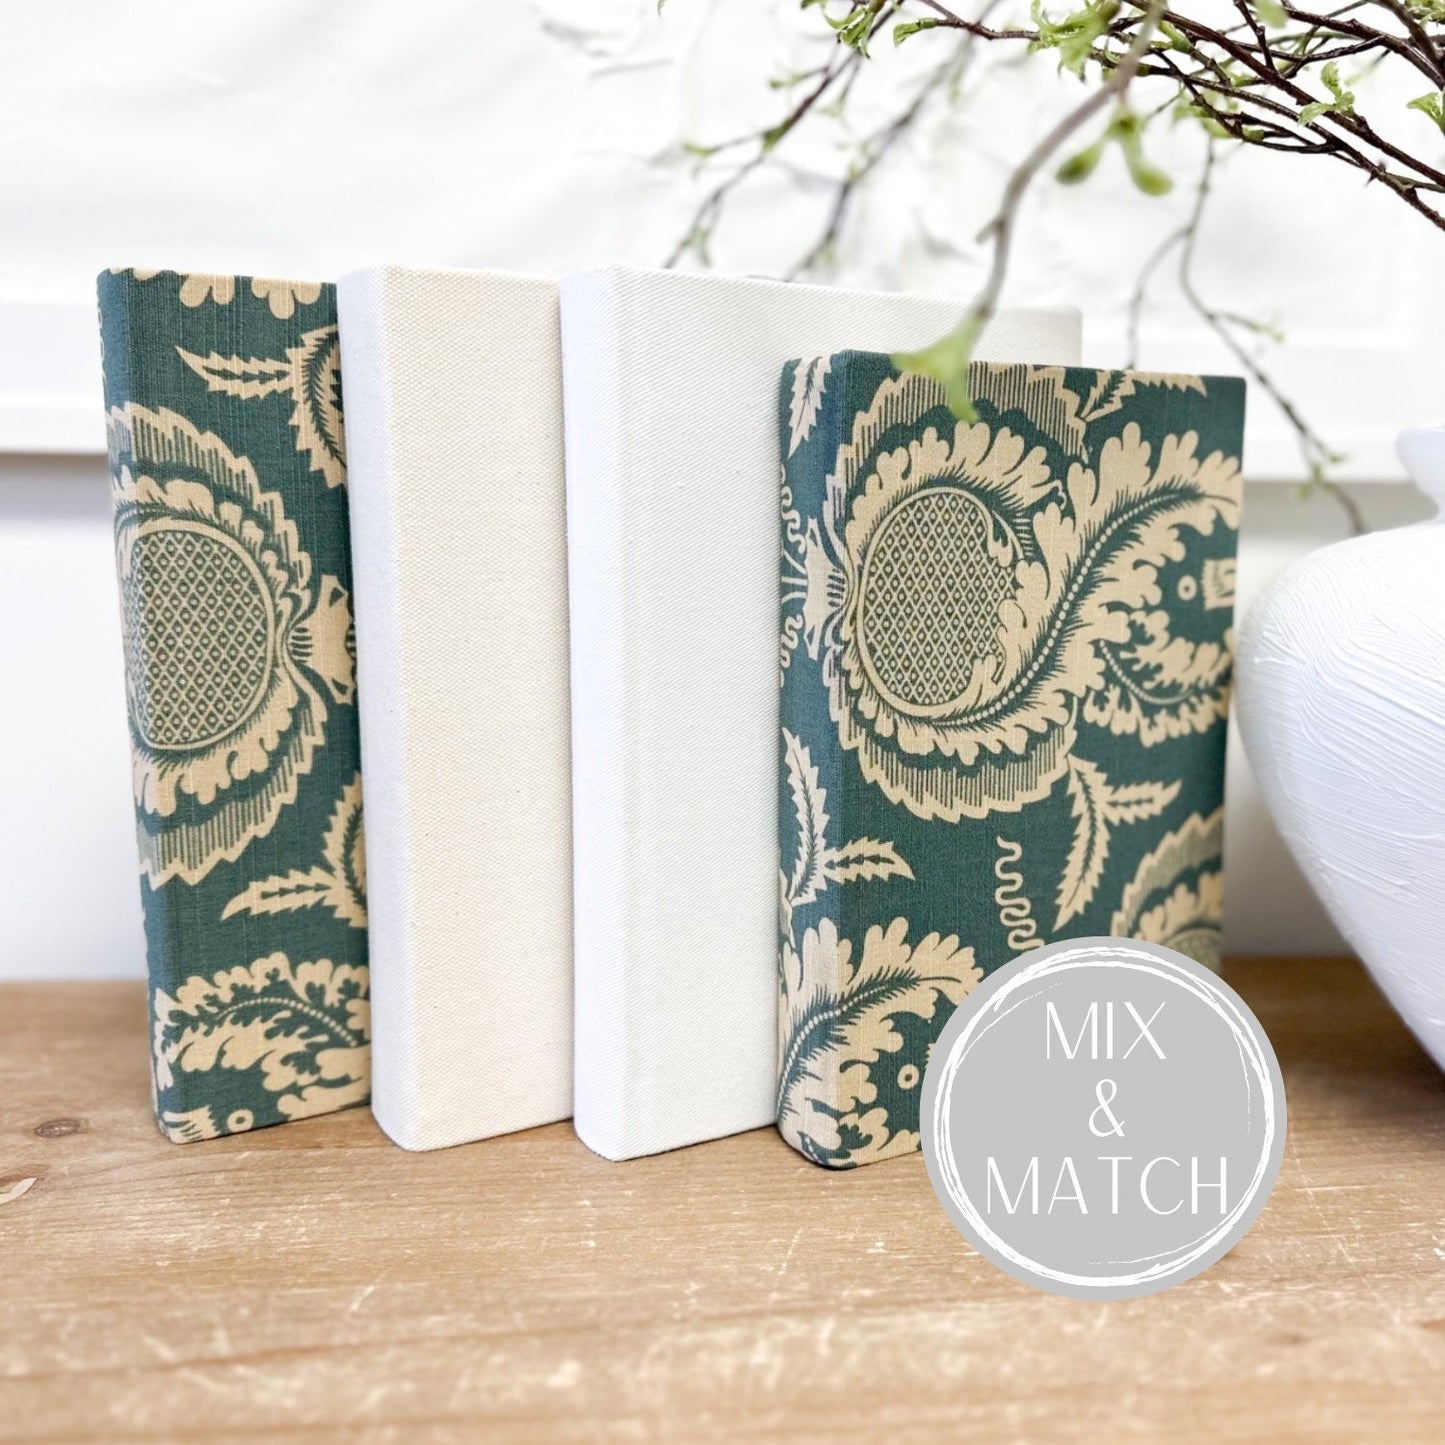 Green Decorative Books for Shelf Decor, Living Room Decor, Fabric Covered Books